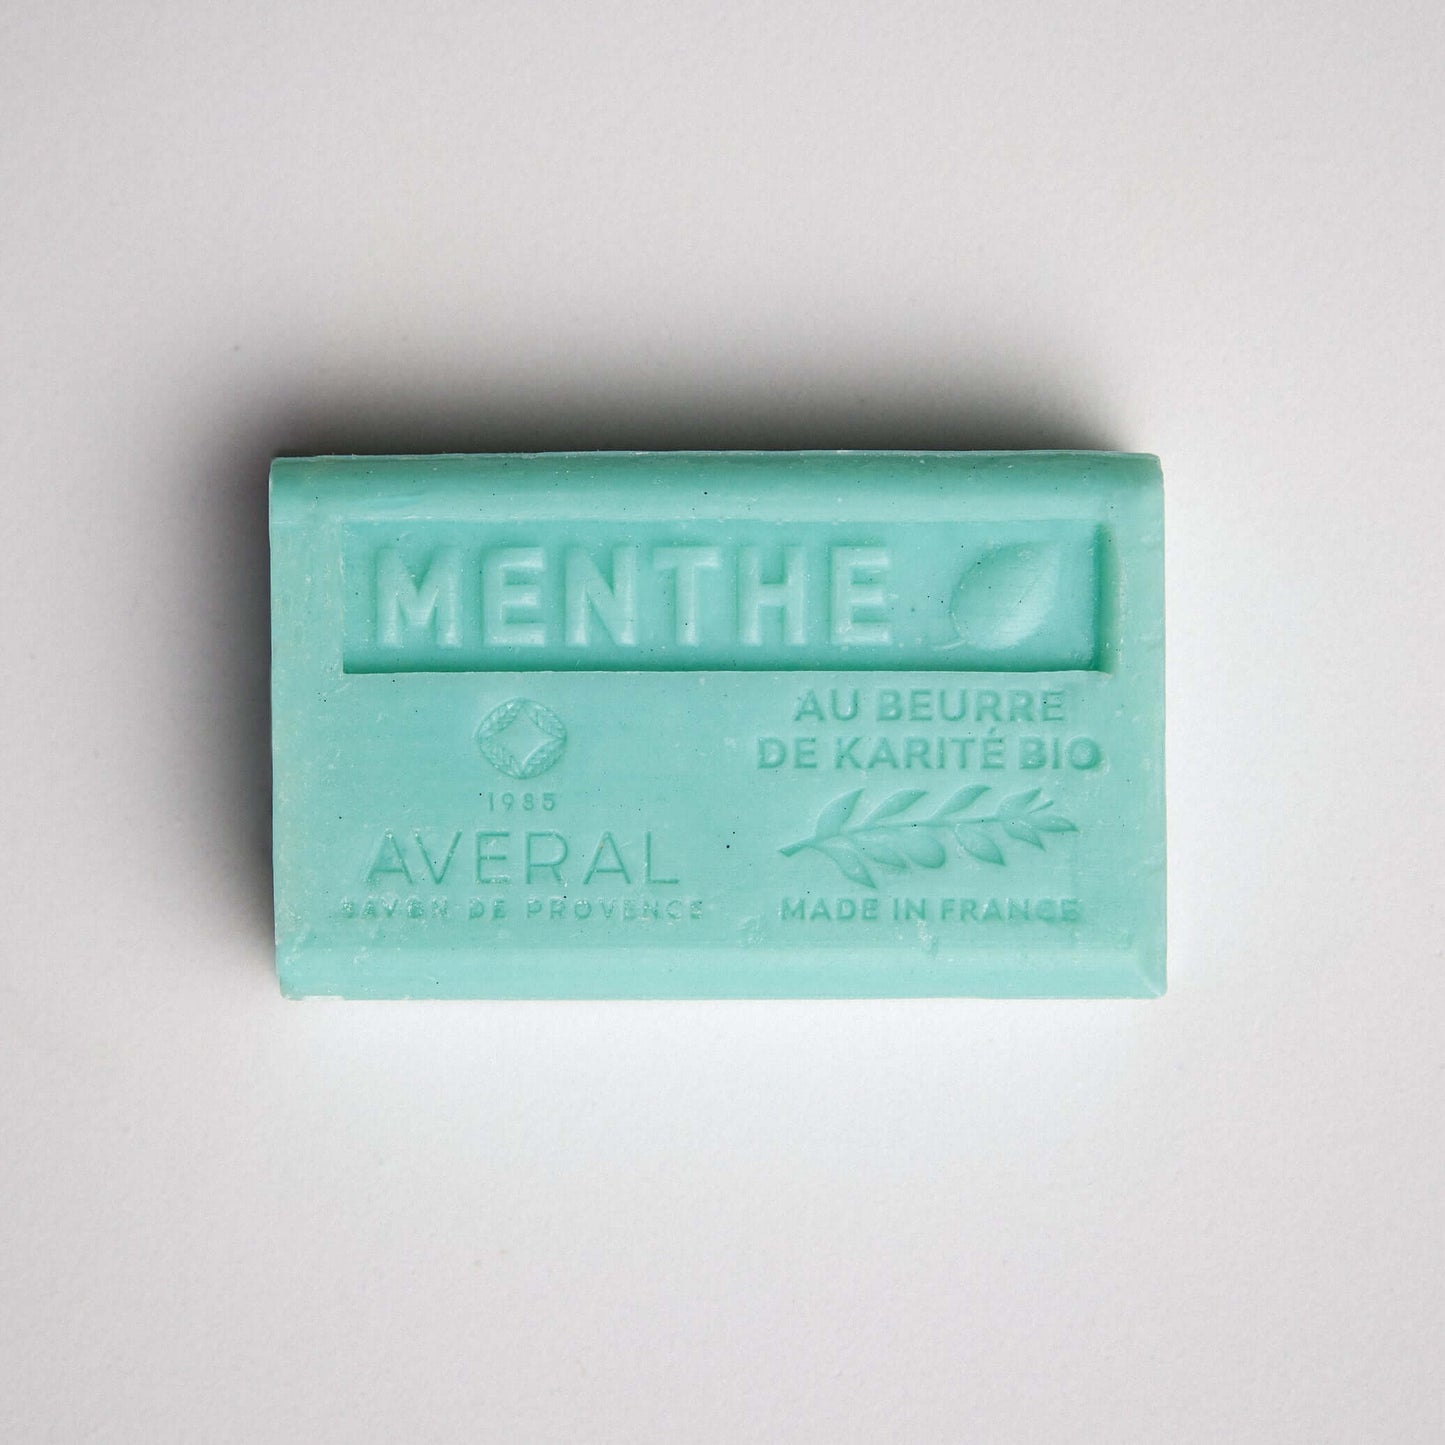 Mint bar soap